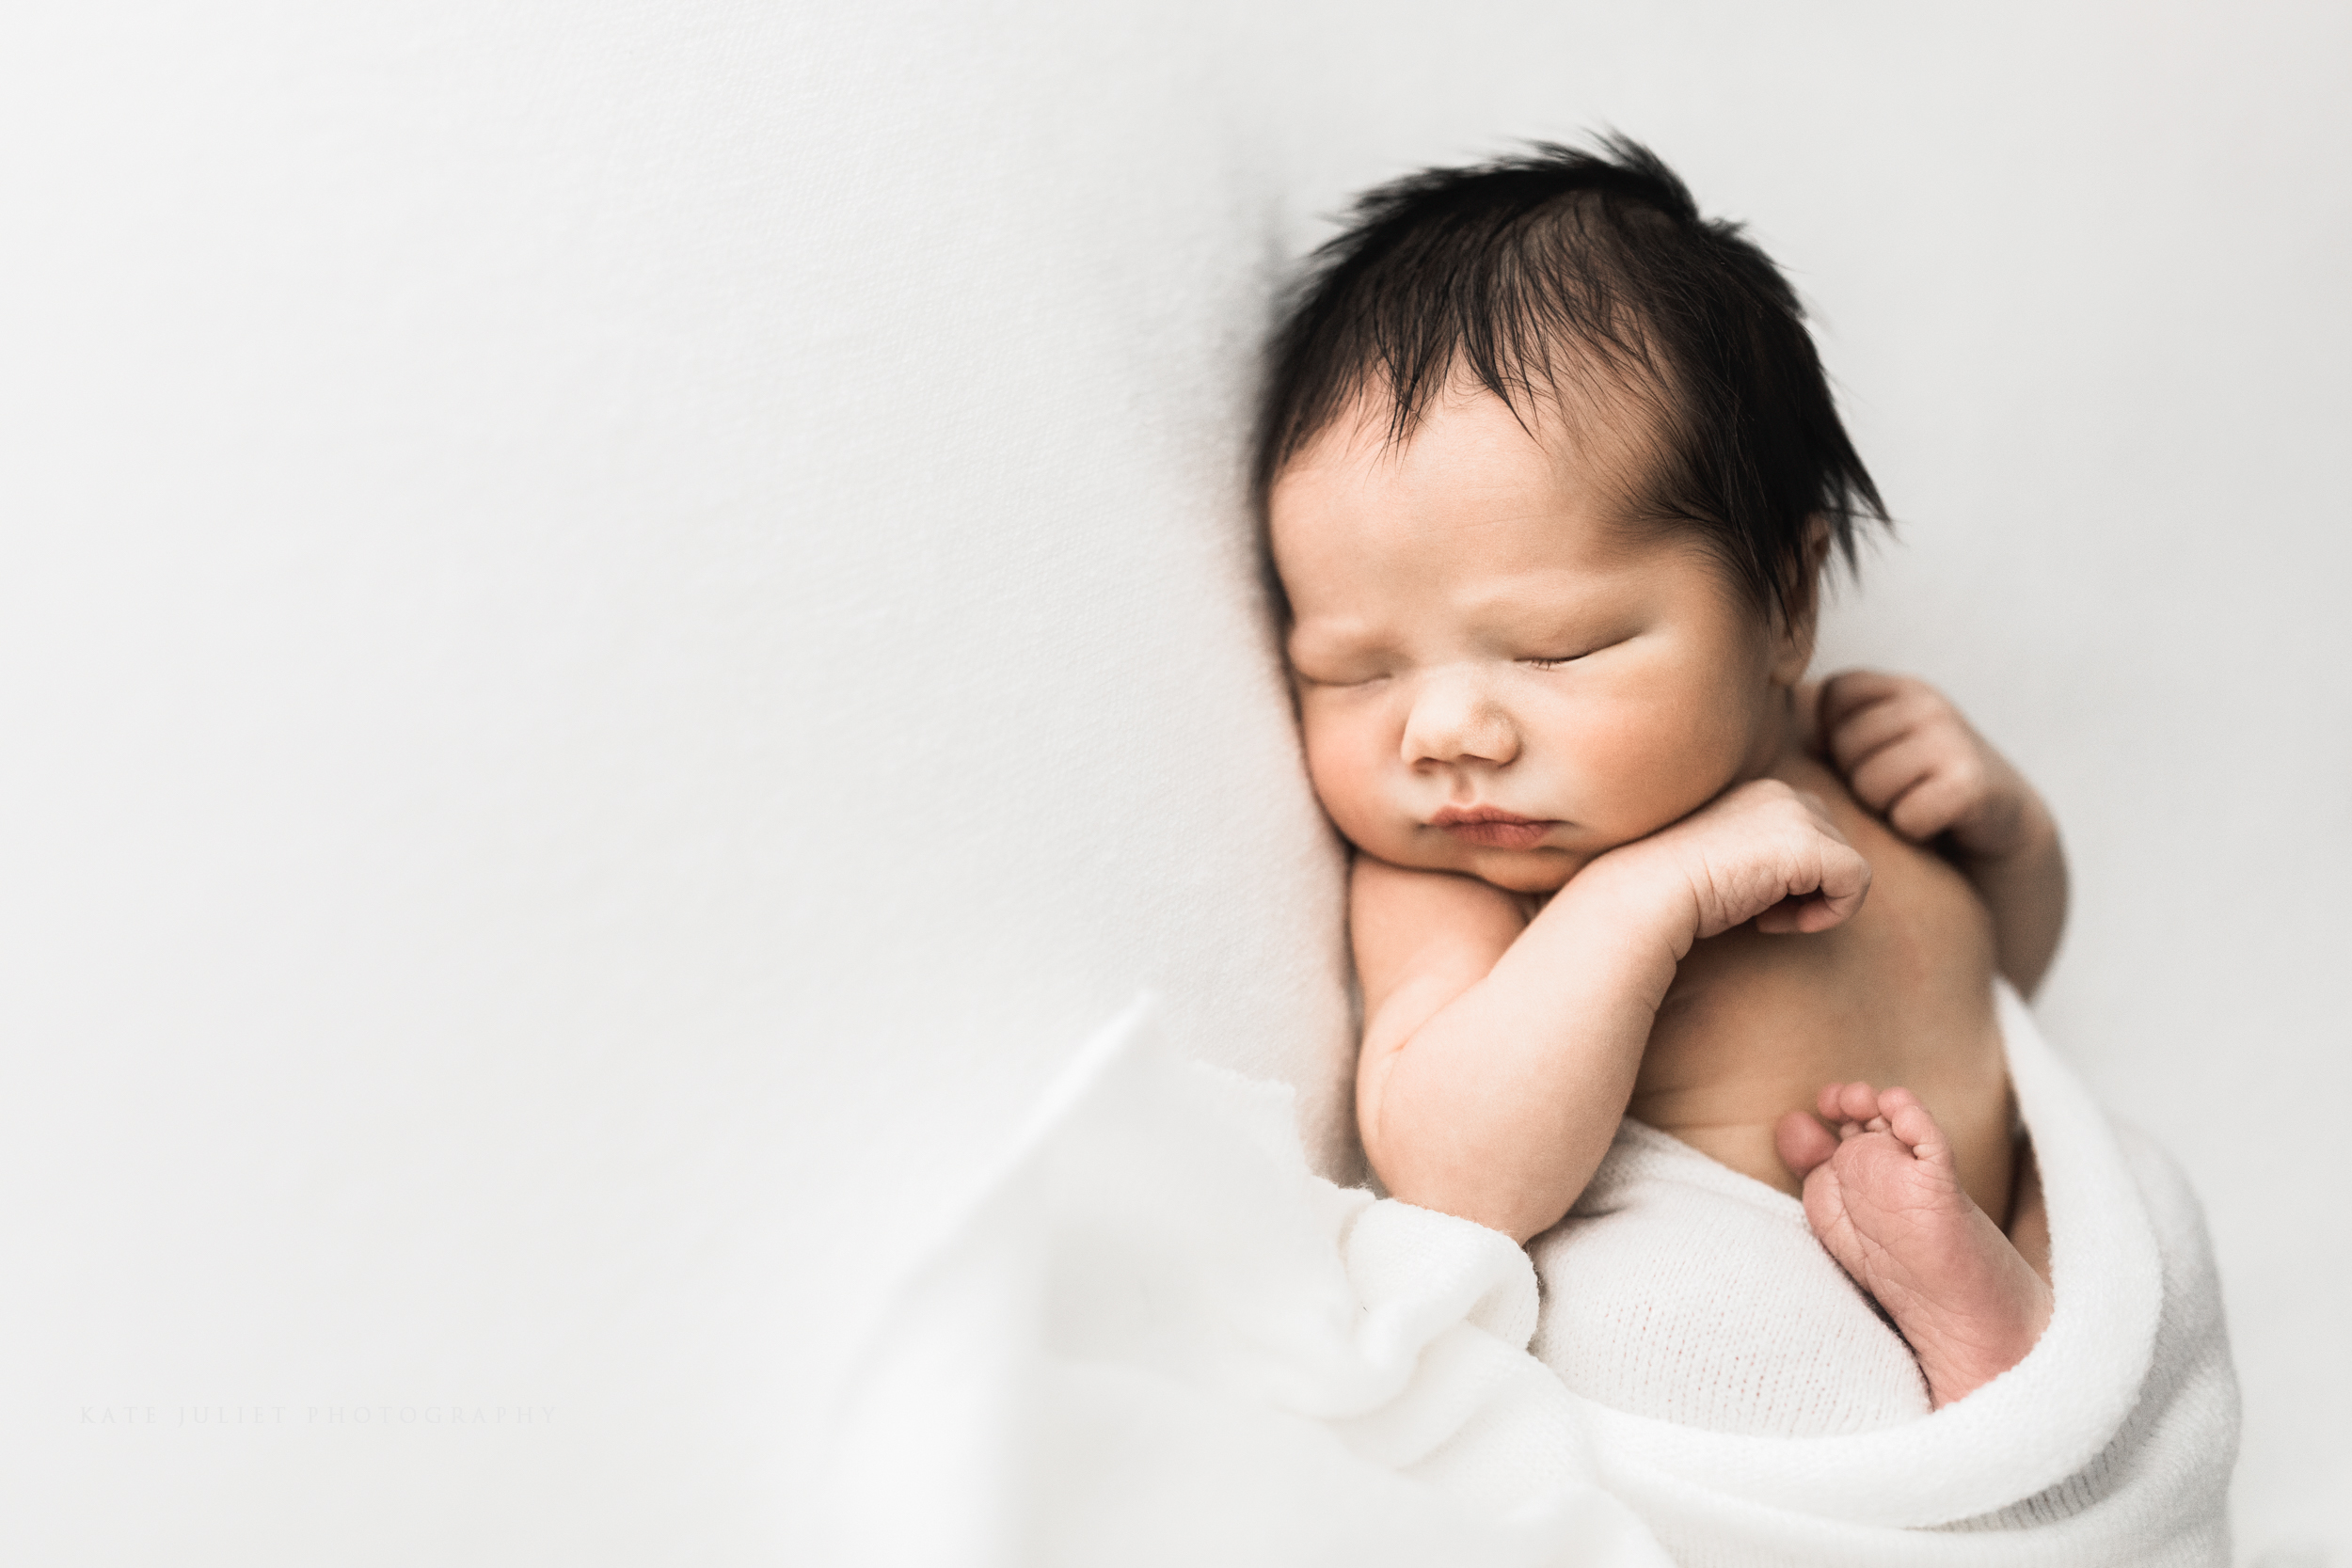 Arlington VA Newborn Baby Boy Photographer | Kate Juliet Photography